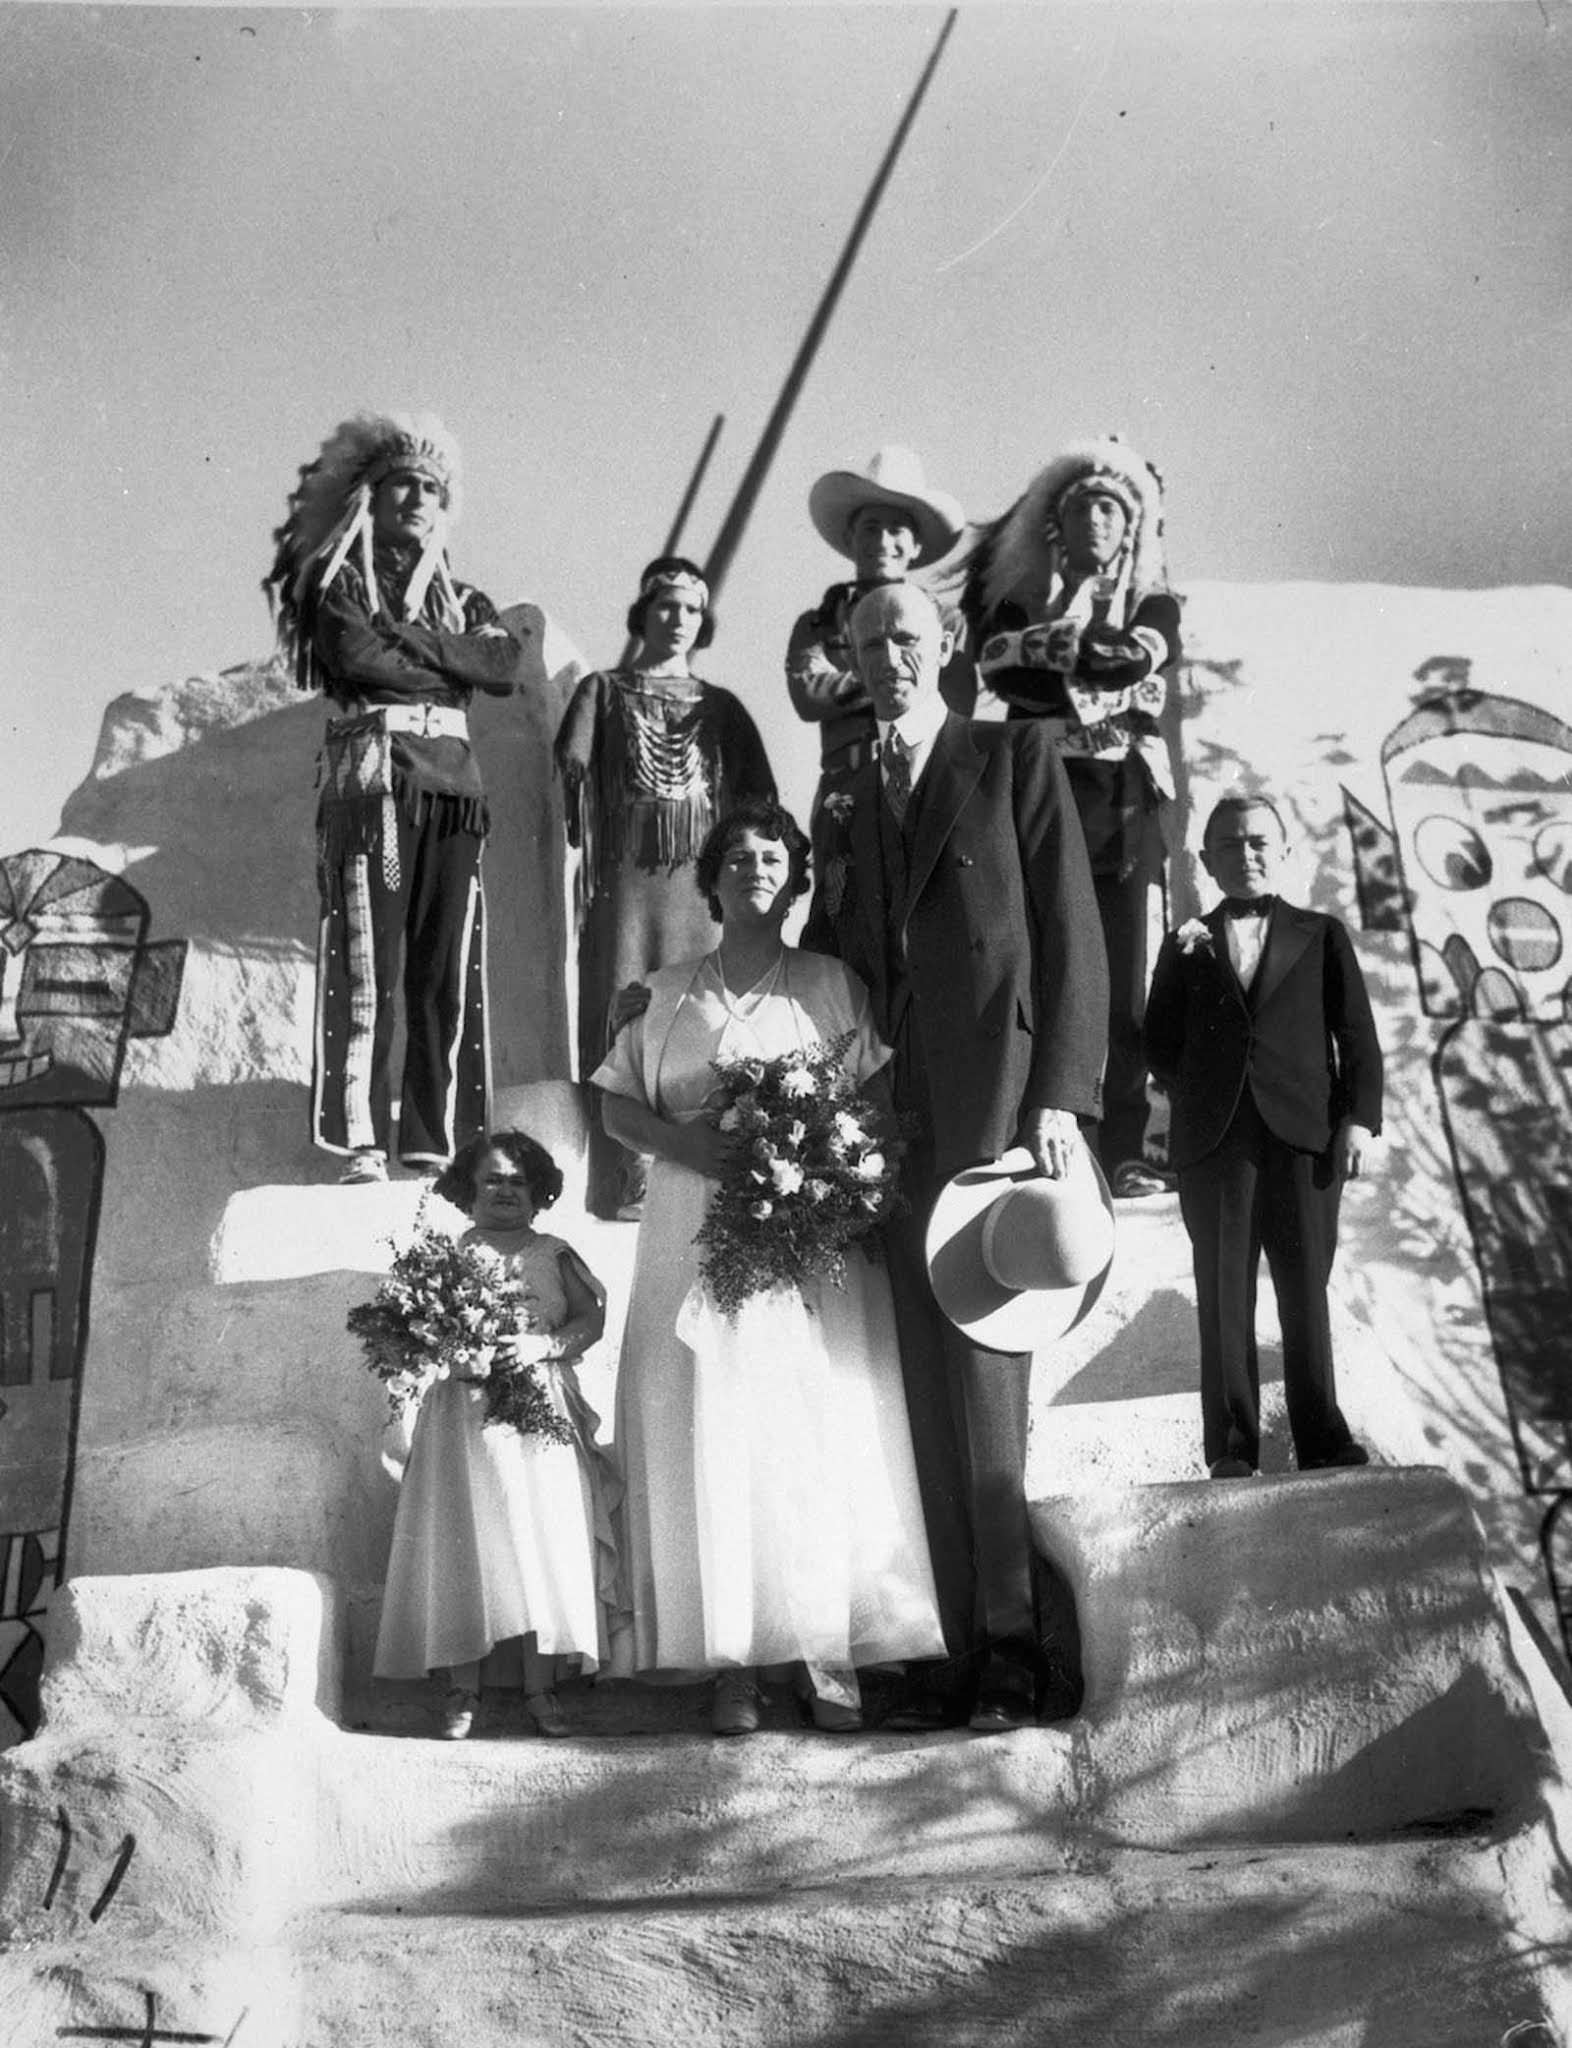 Madsen’s wedding at Romona Village, Los Angeles, California. 1932.